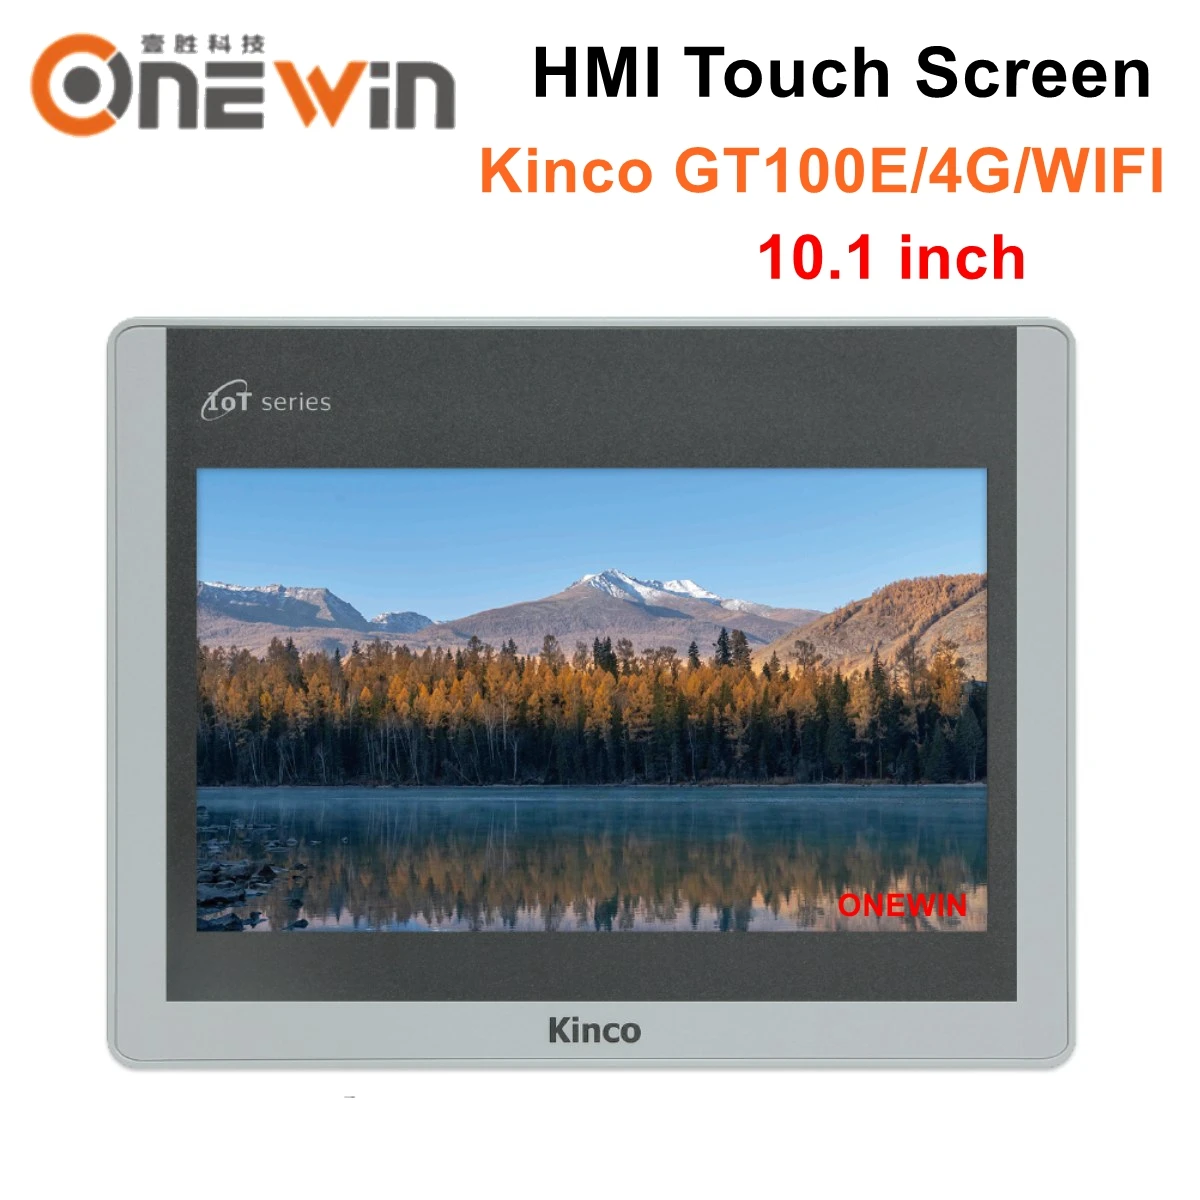 Kinco 4G WiFi HMI dokunmatik ekran GT100E GT100E-4G GT100E-WiFi Ethernet desteği uzaktan 10.1 inç insan makine arabirimi